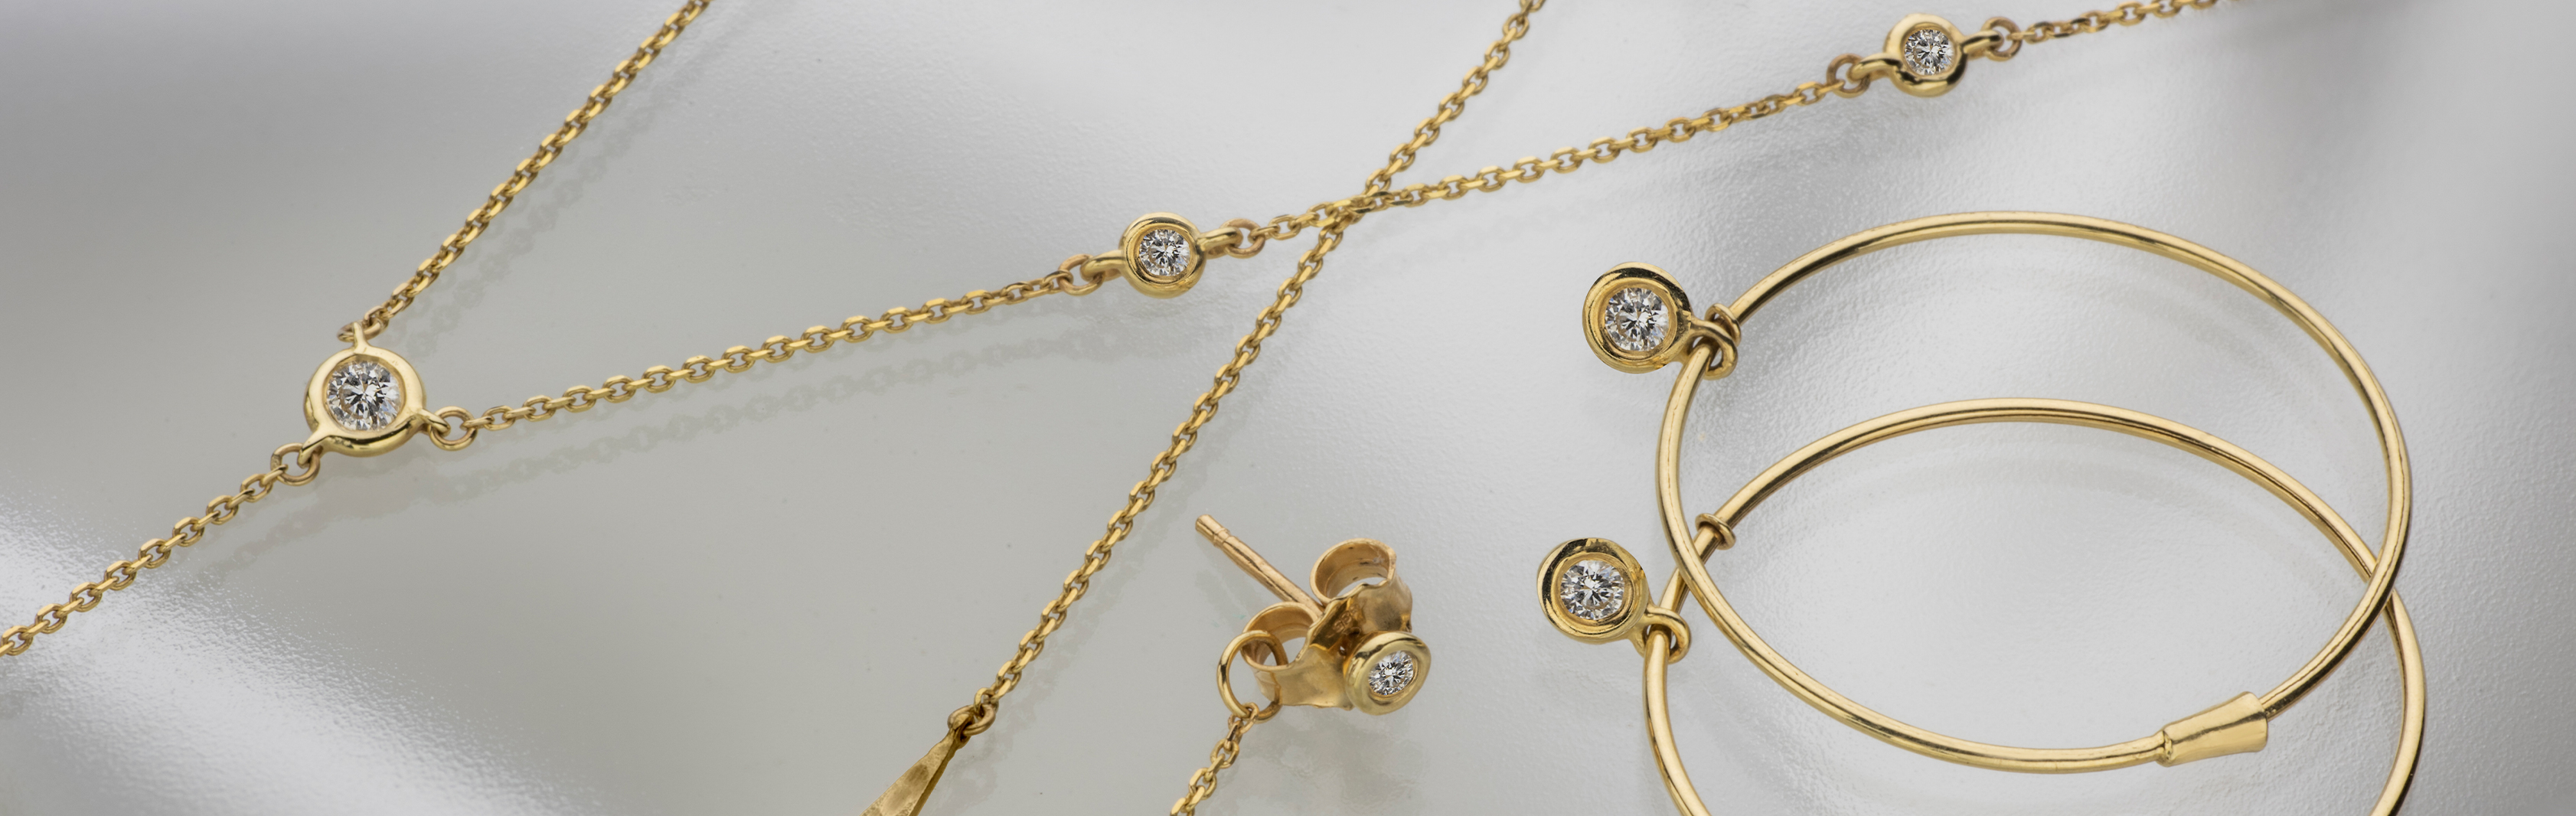 Diamond Sparkle Collection | 14K Gold and Diamond Jewelry